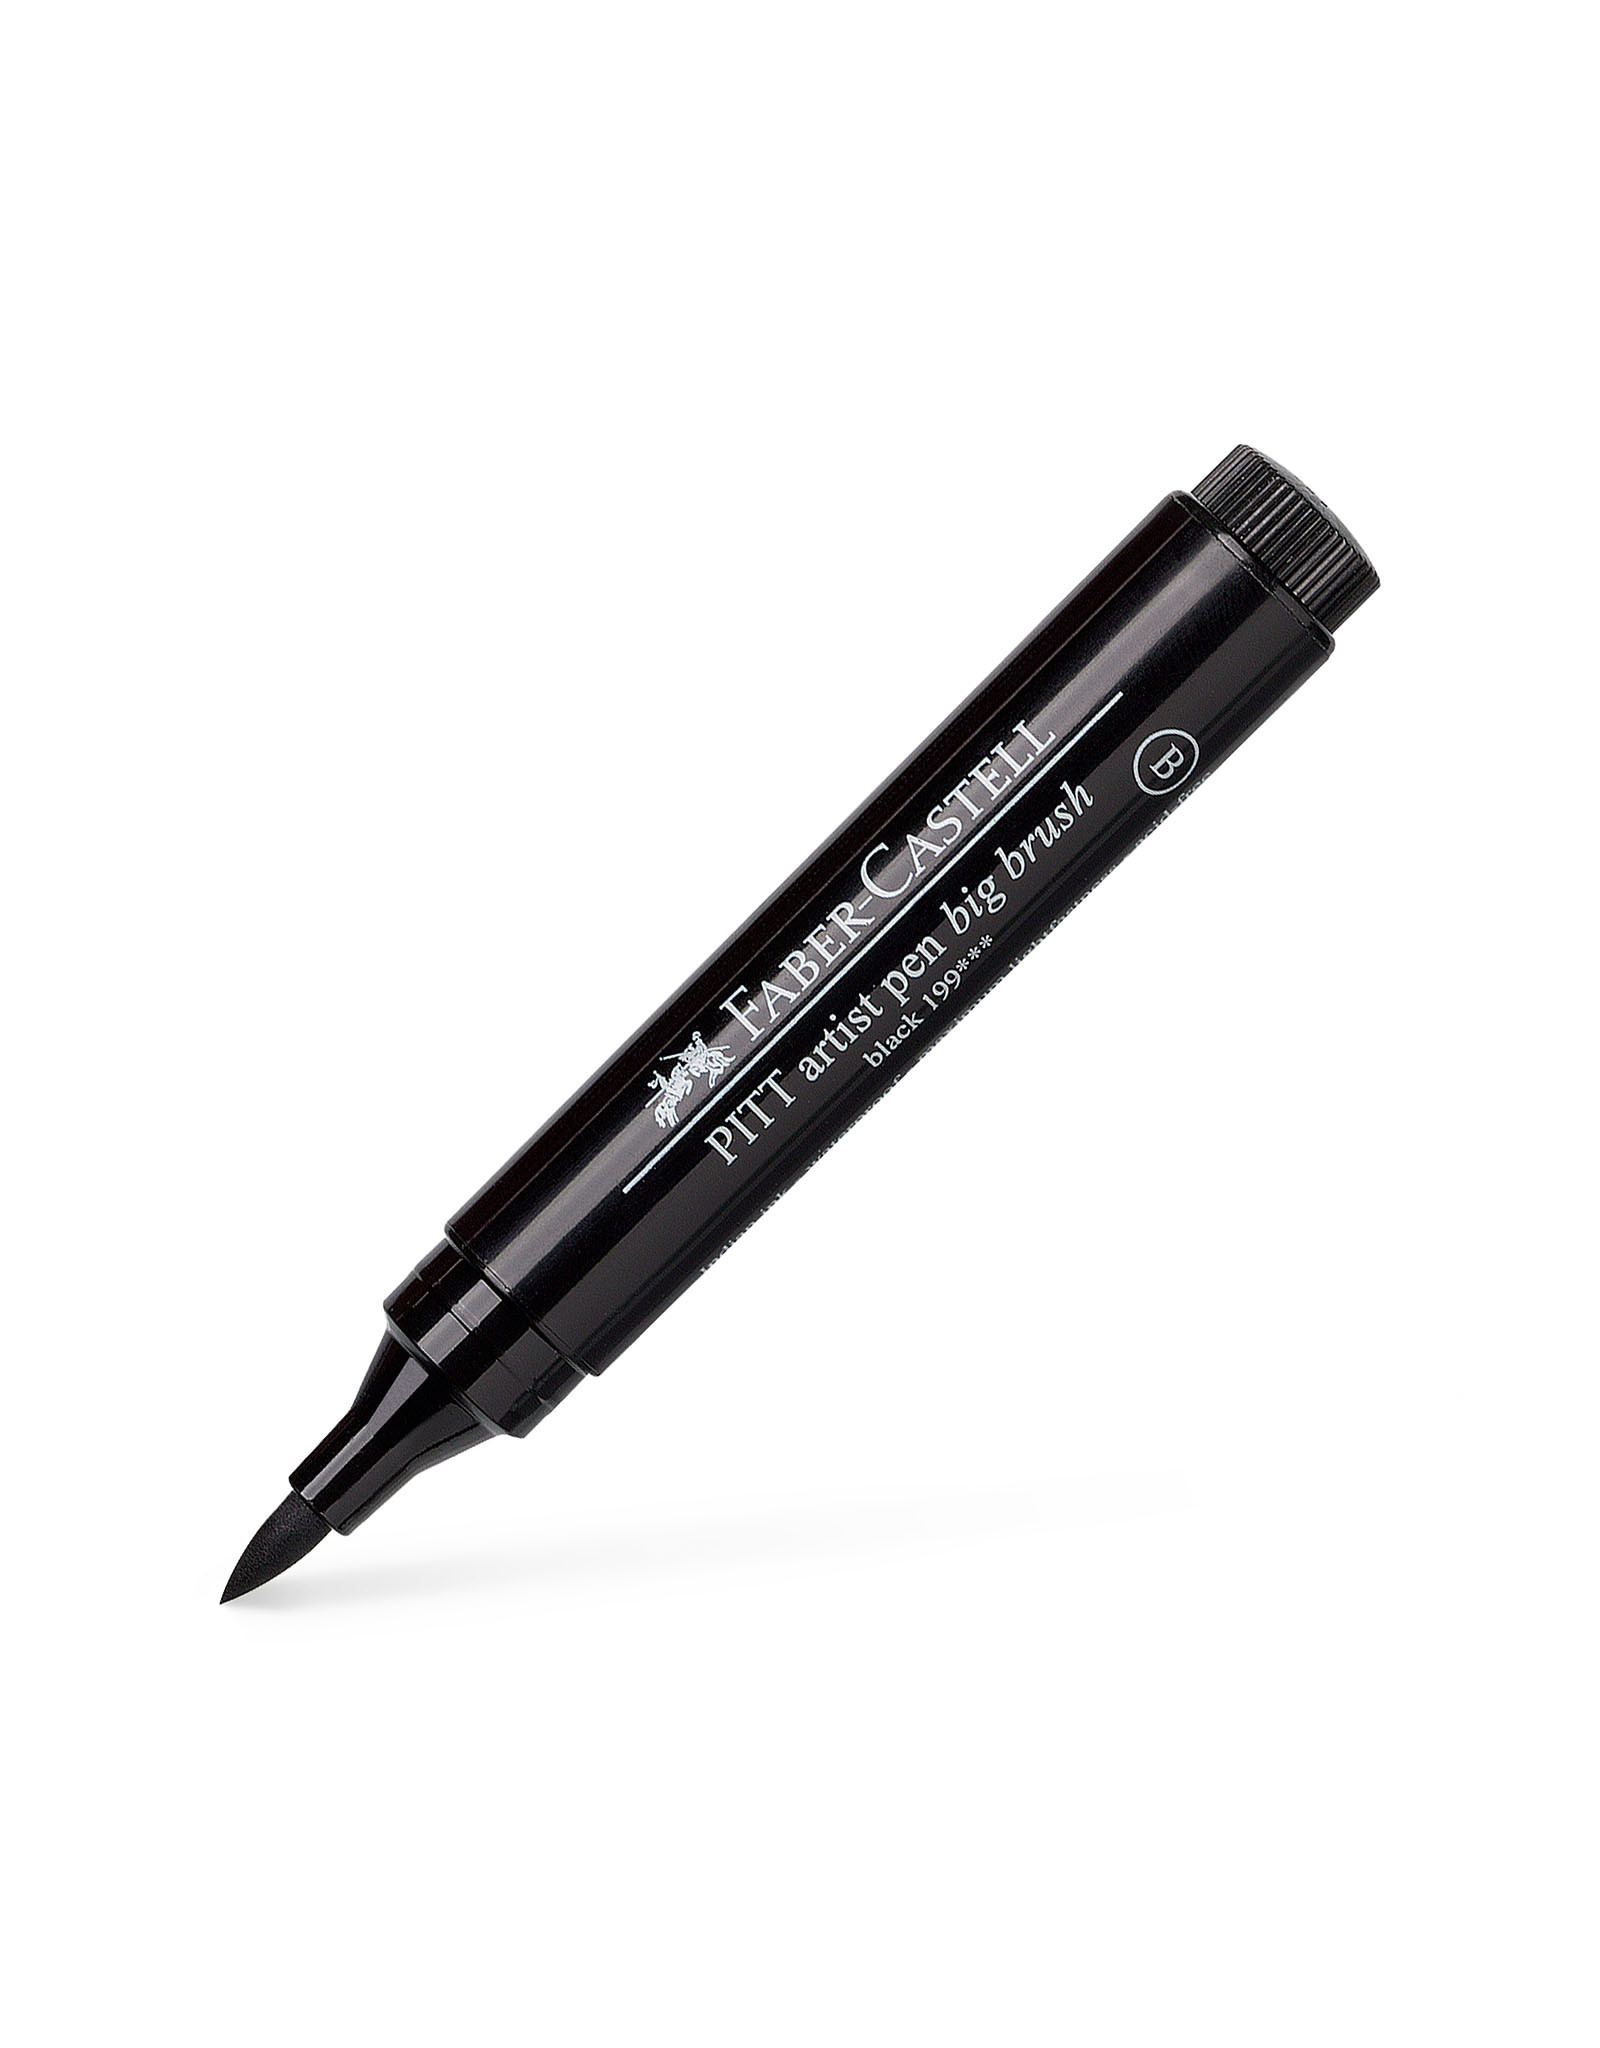 FABER-CASTELL Pitt Artist Pen, Big Brush, Black